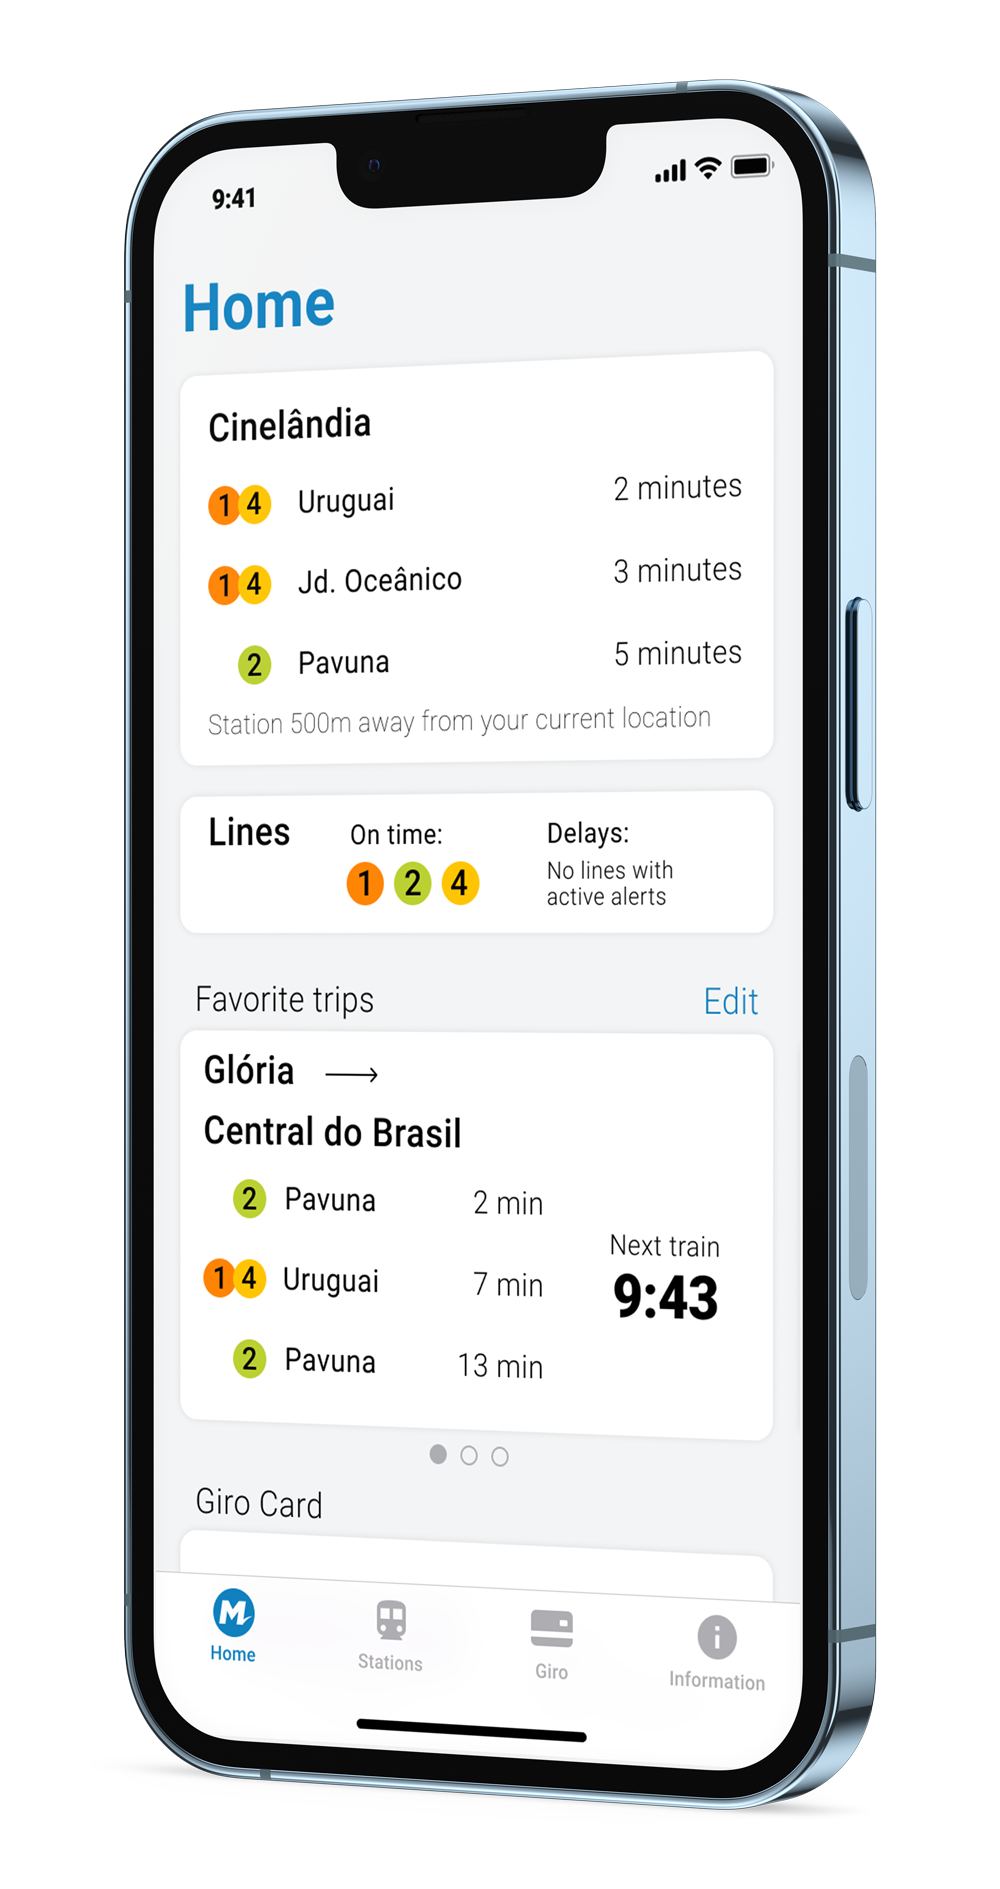 Metrô Rio app homescreen displayed in an iPhone